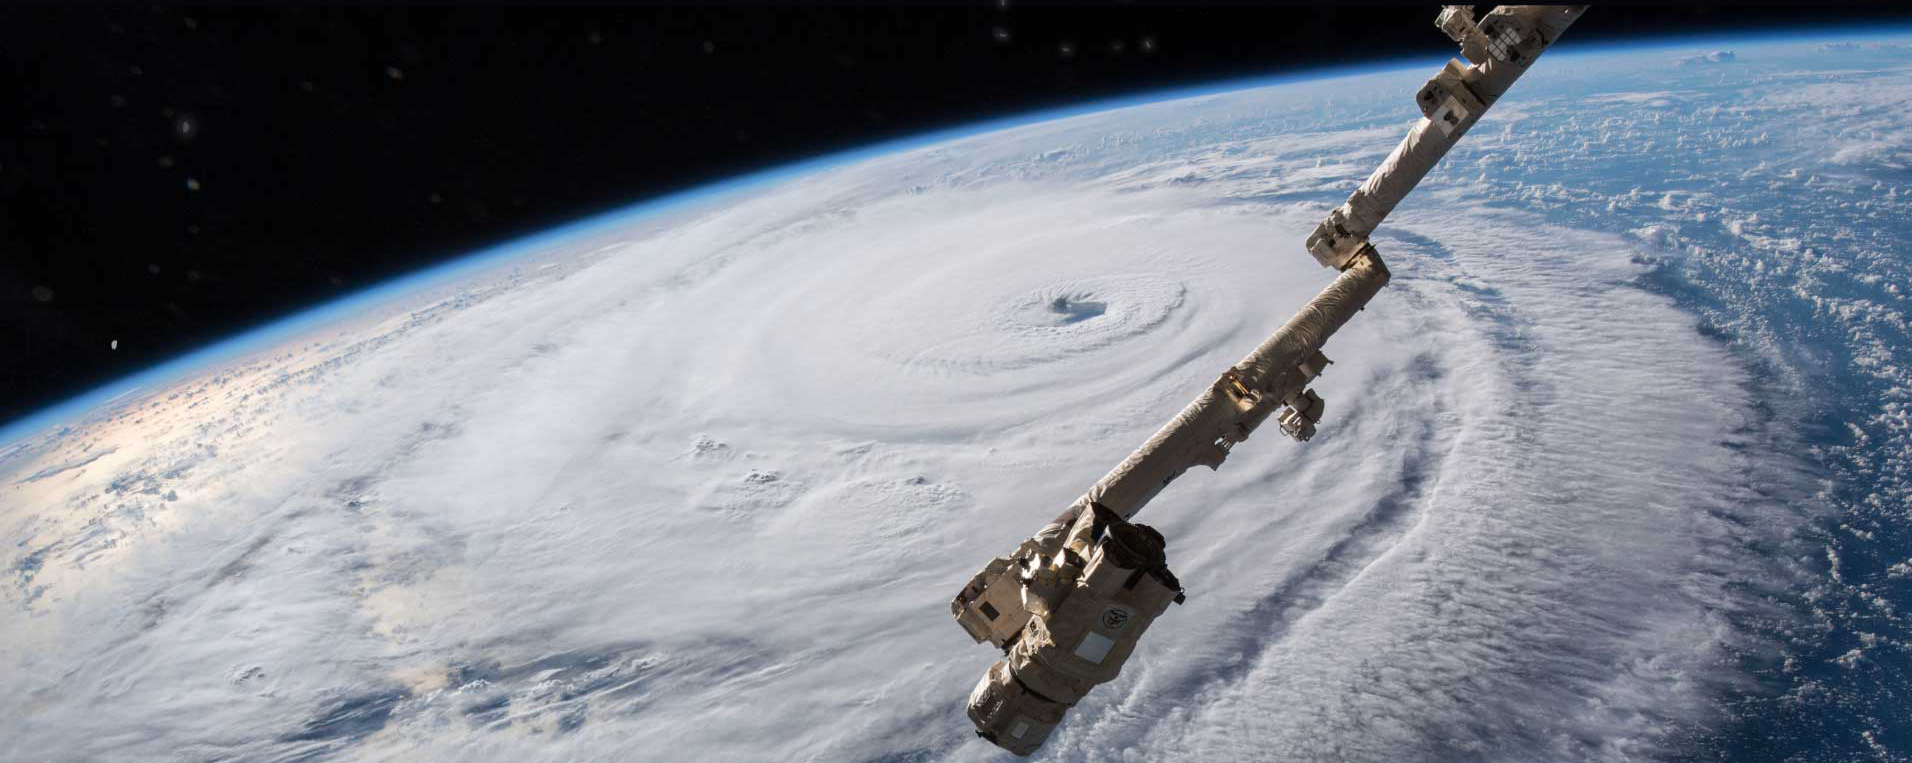 Sattelite imagery of a hurricane